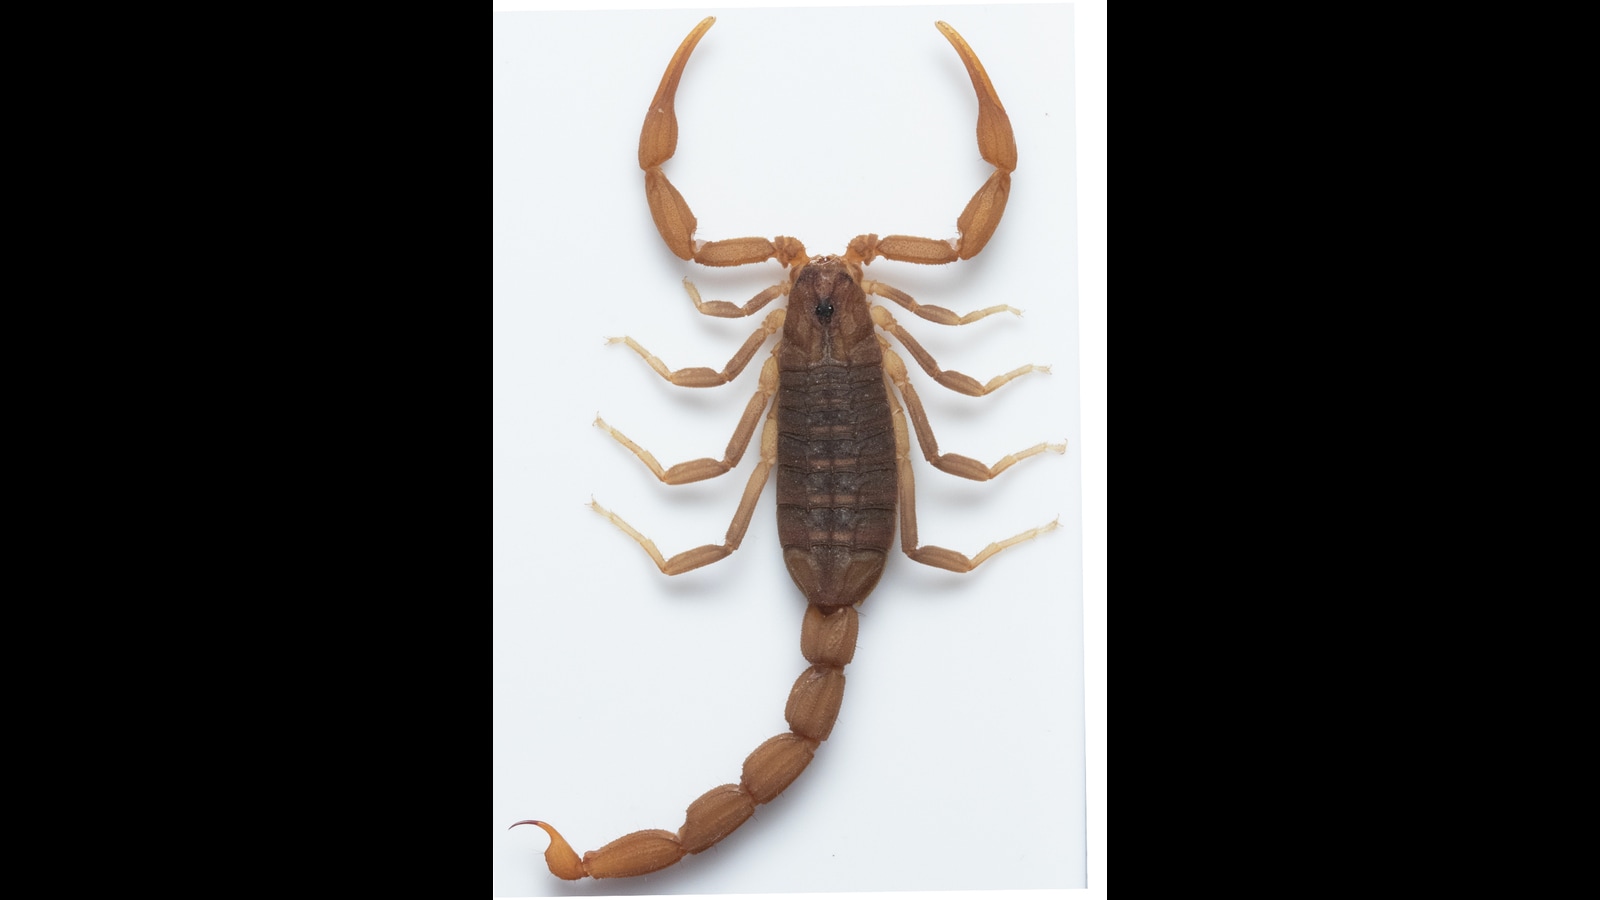 New Species Of Scorpion Discovered In Maharashtra Mumbai News Hindustan Times